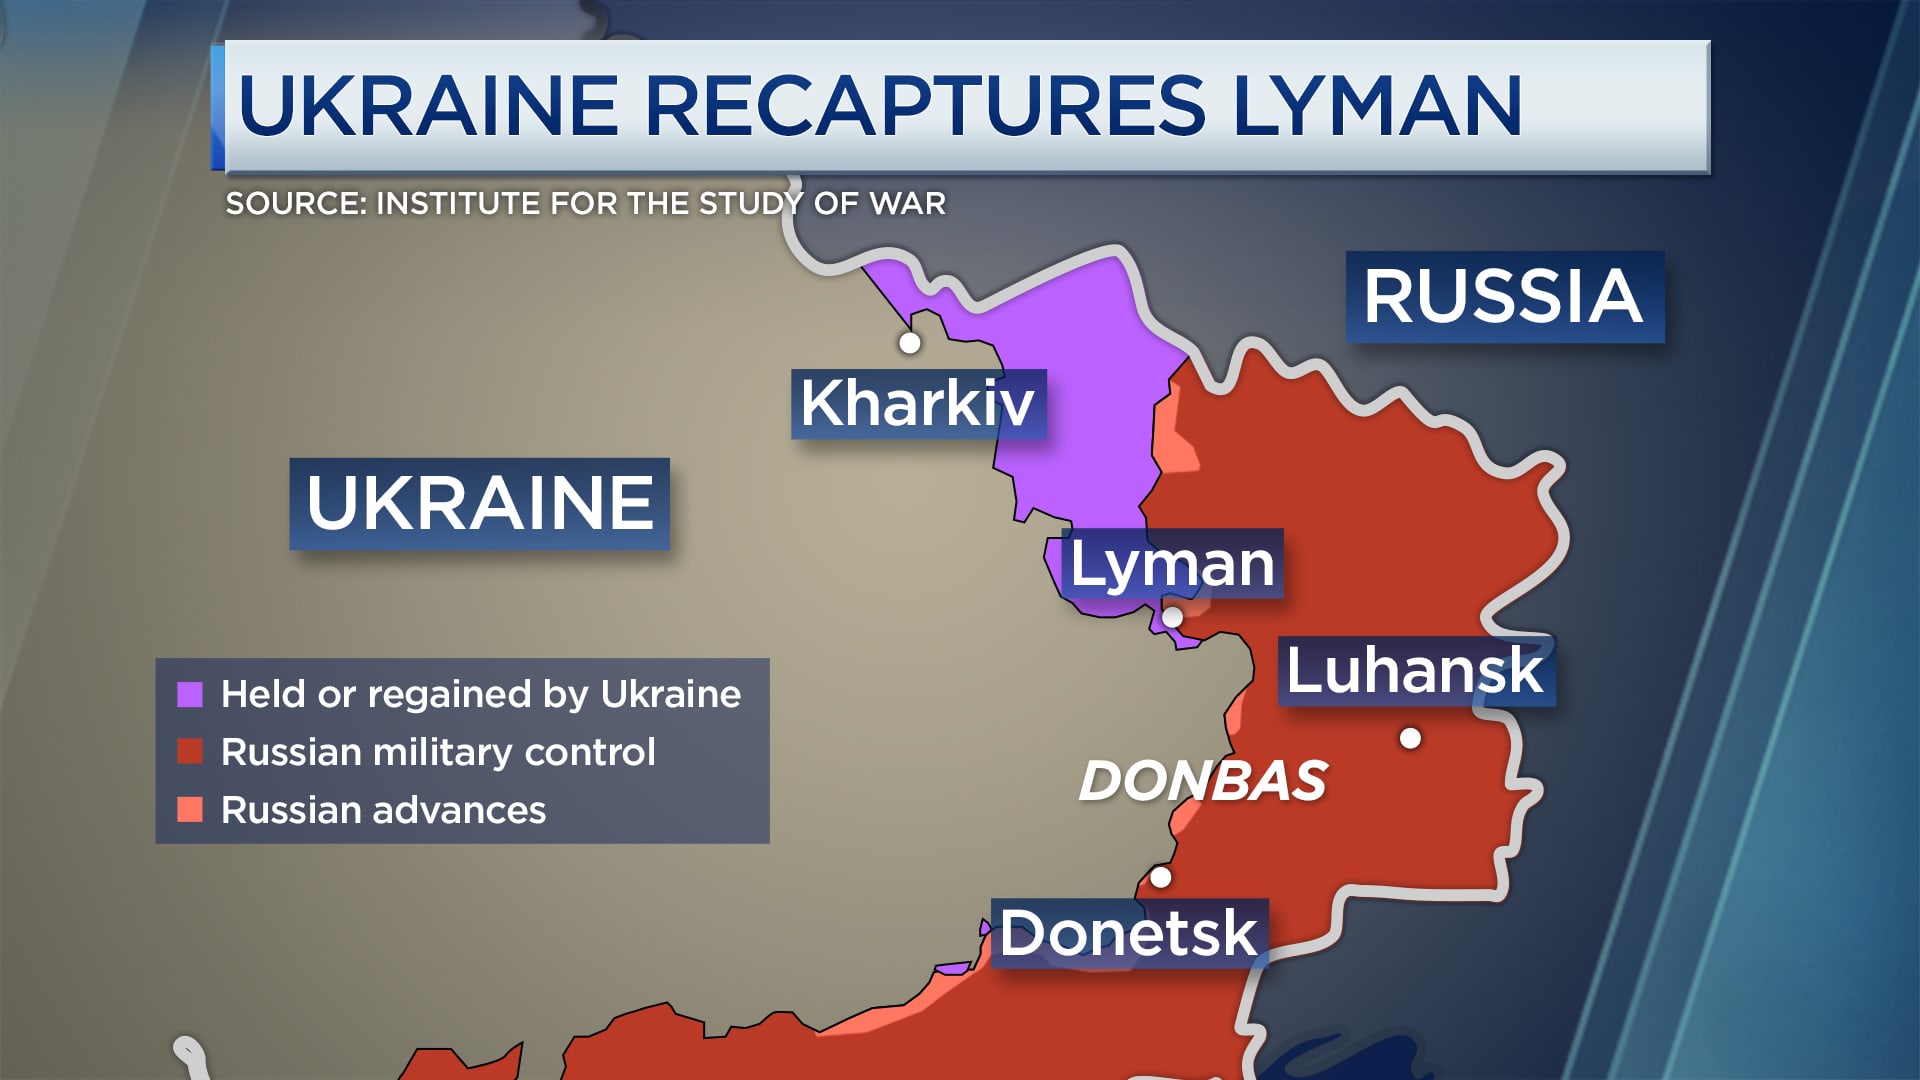 Ukraine recaptures Lyman, a key logistics hub for Russian forces.